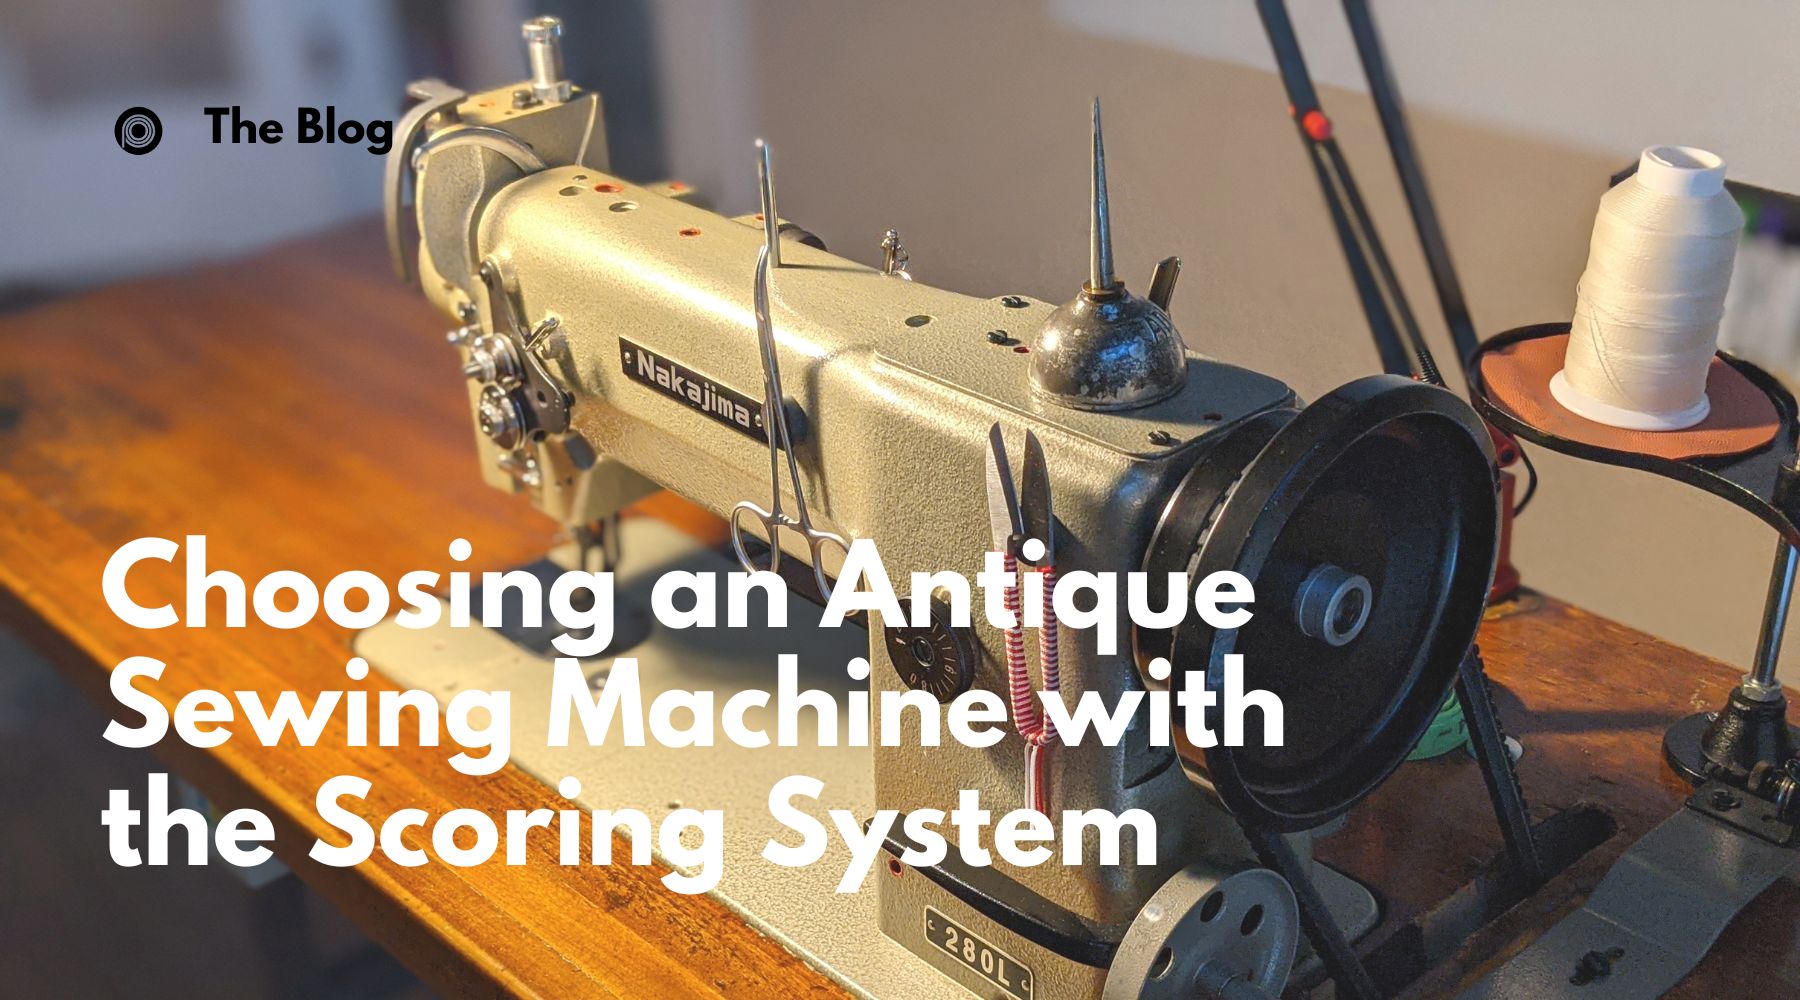 Antique Sewing Machine Scoring System